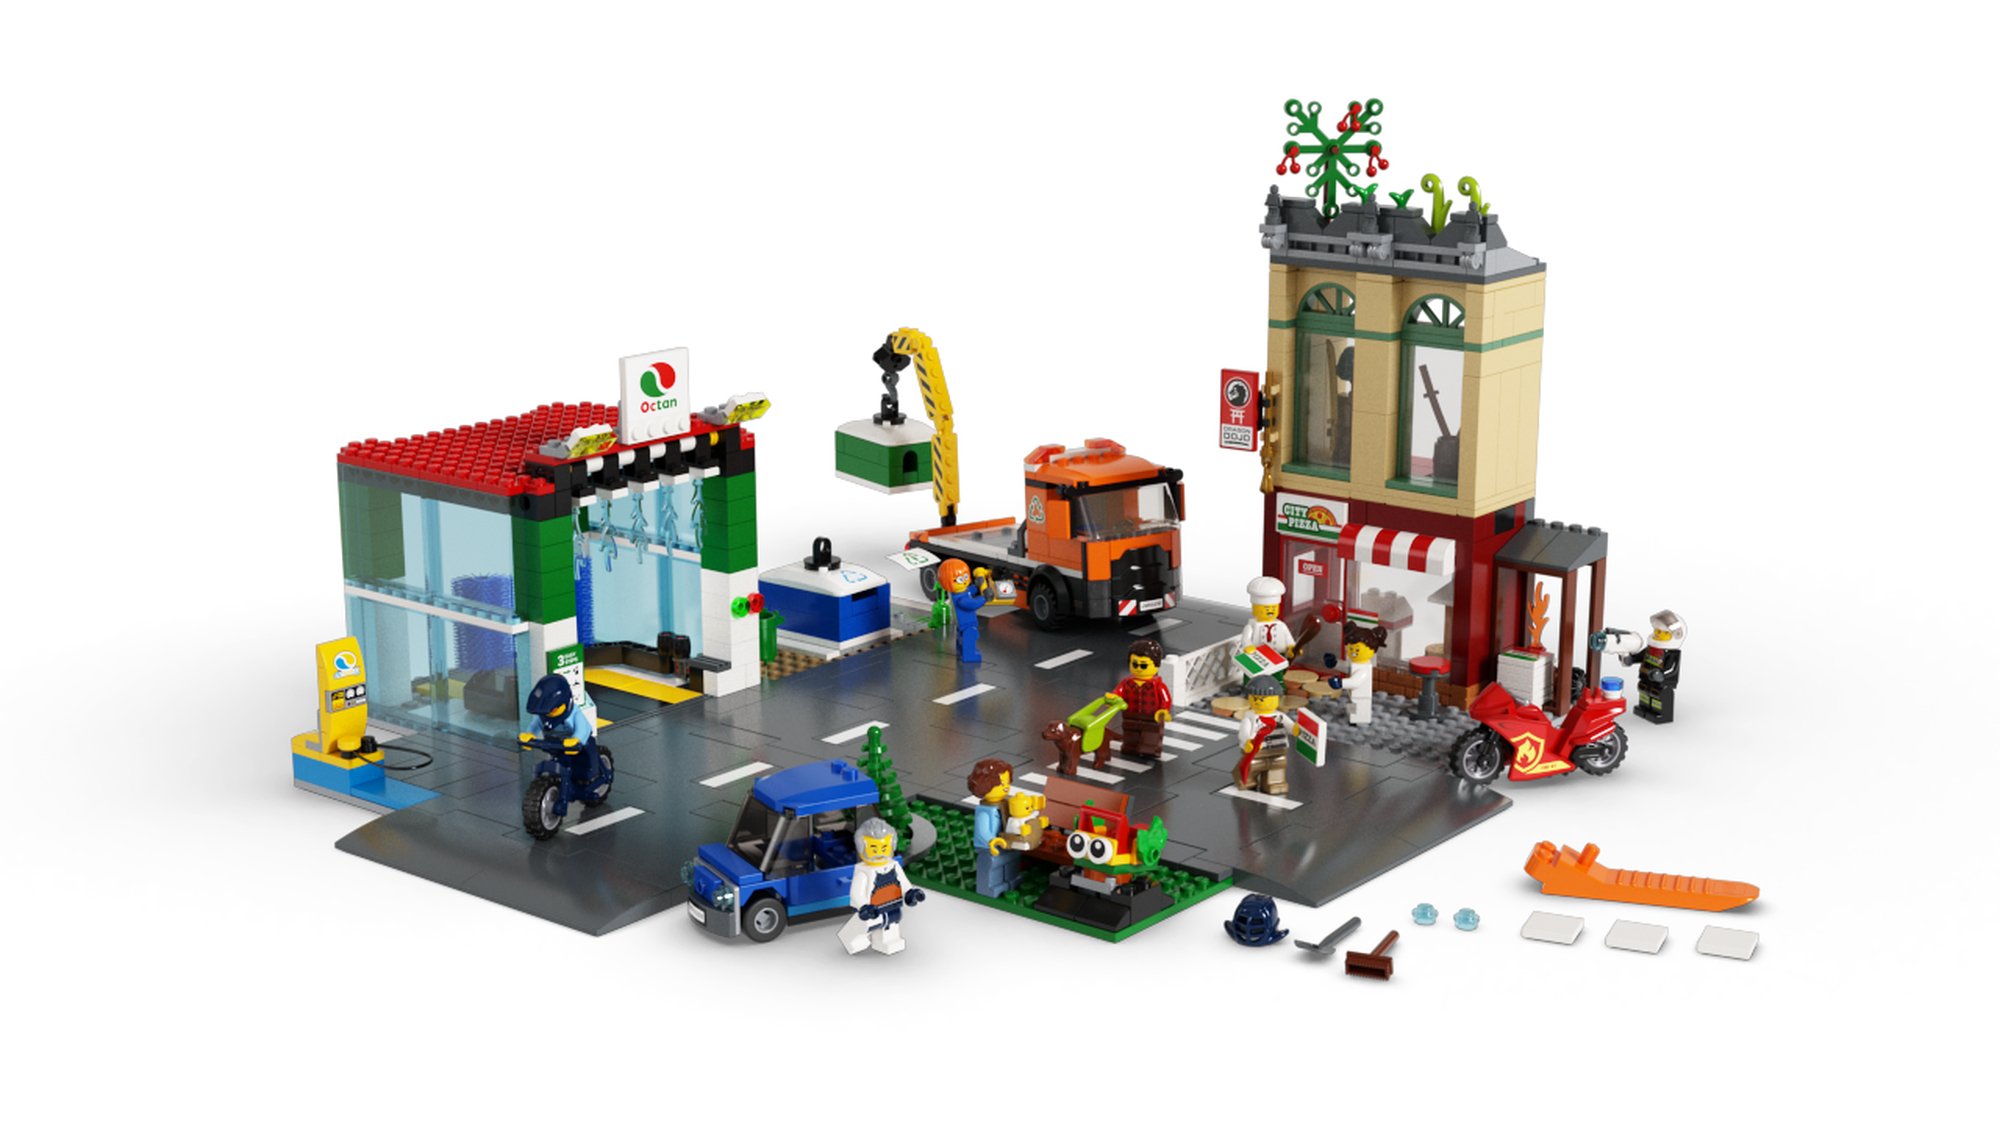 Lego 60238 - Blocks - Buy Lego 60238 With Free Shipping - AliExpress